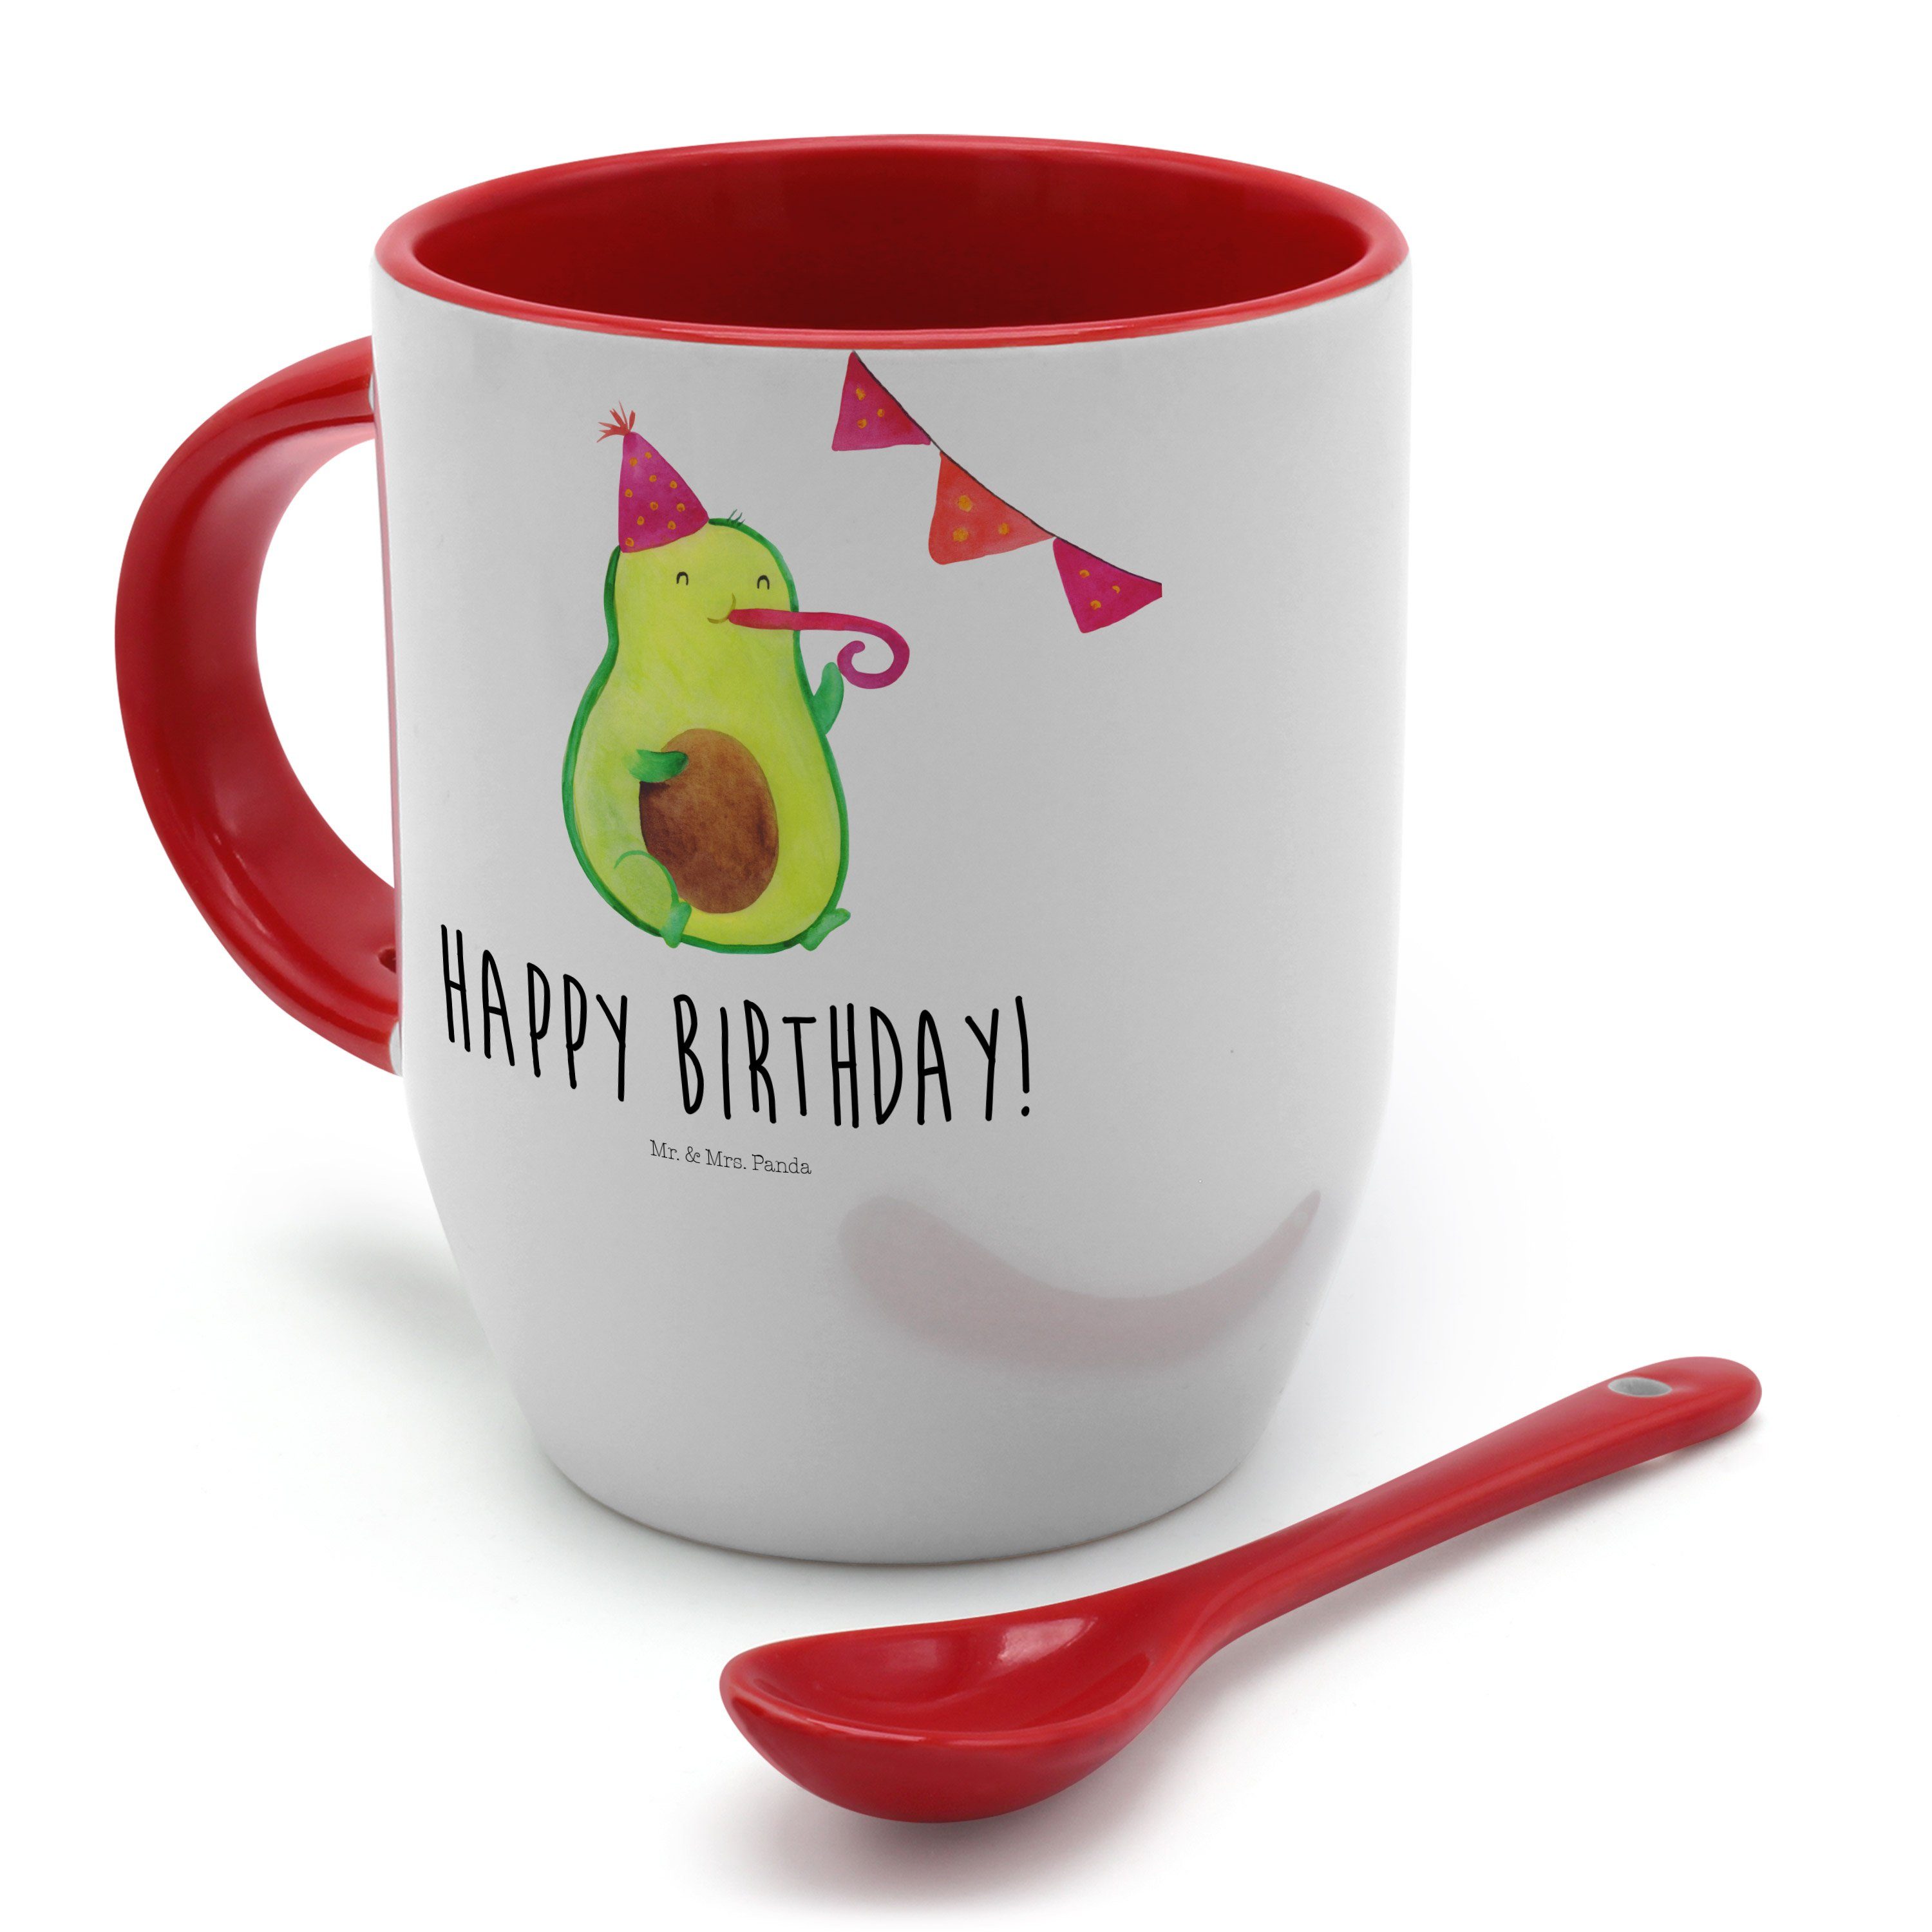 Keramik Weiß Birthday Feie, Mr. Tasse, Avocado Tasse - Party, Vegan, - Mrs. & Tassen, Panda Geschenk,